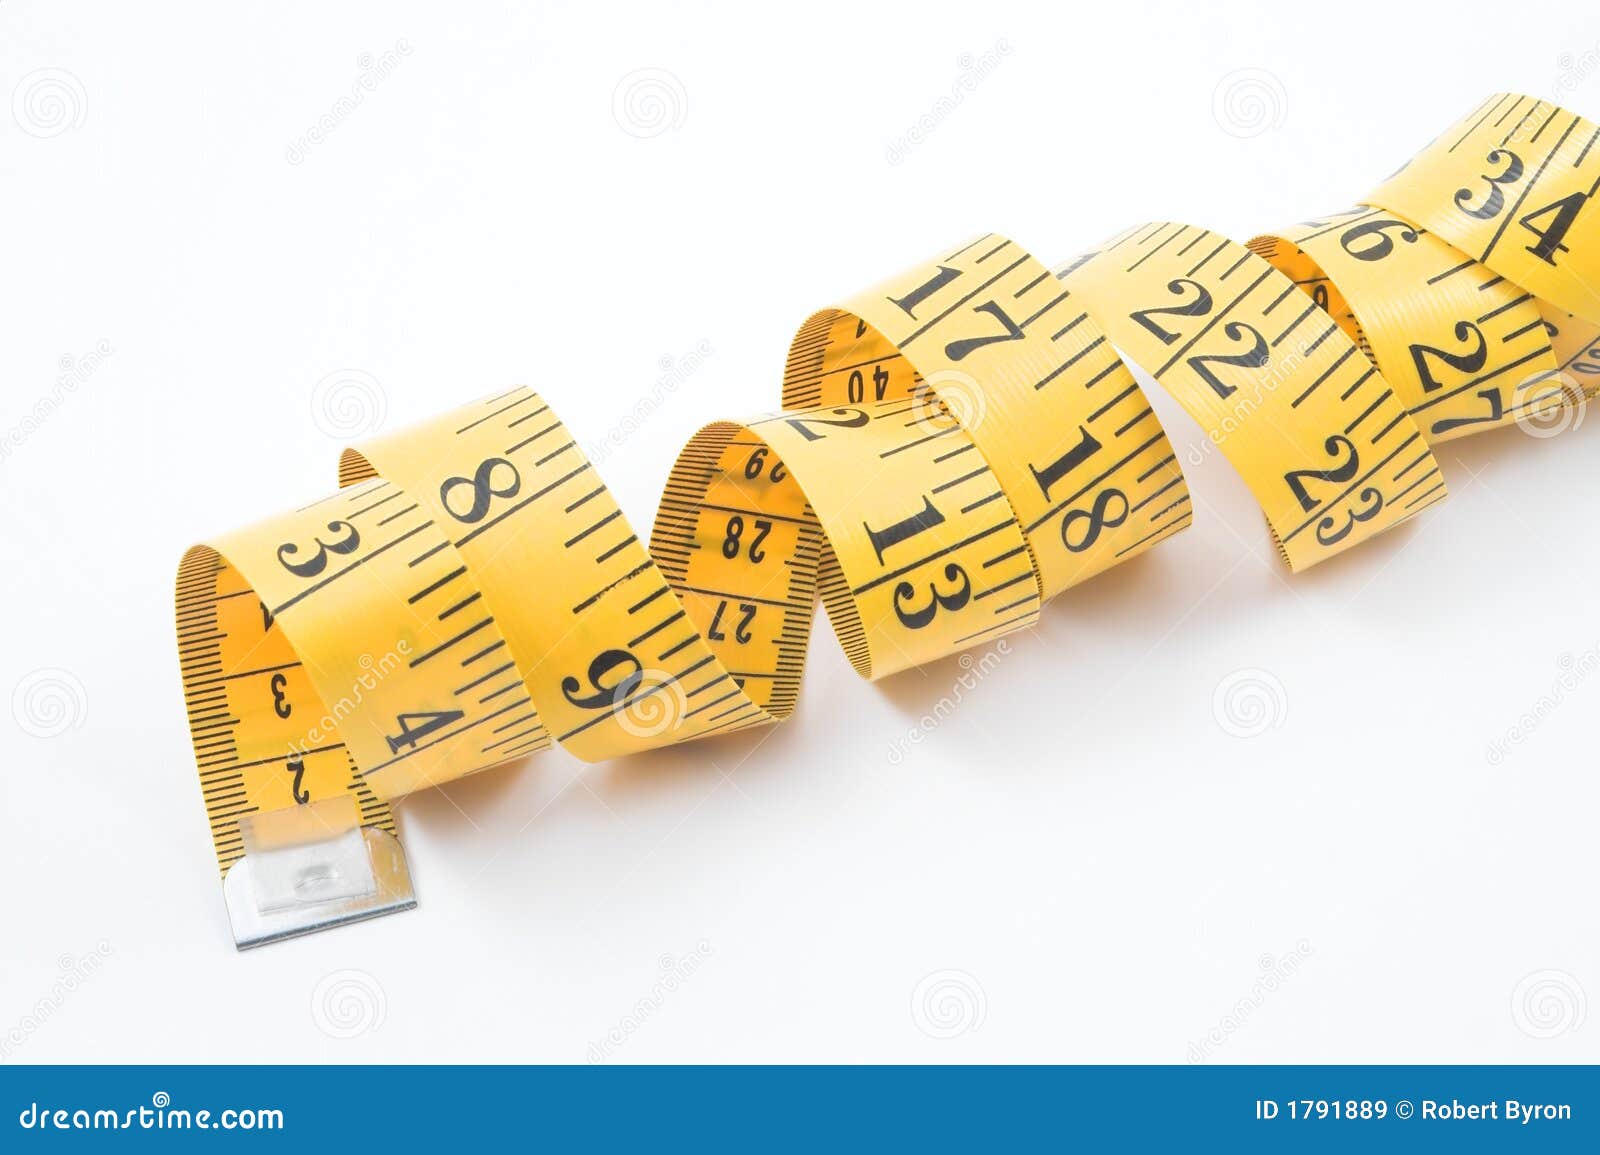 tailor's measuring tape